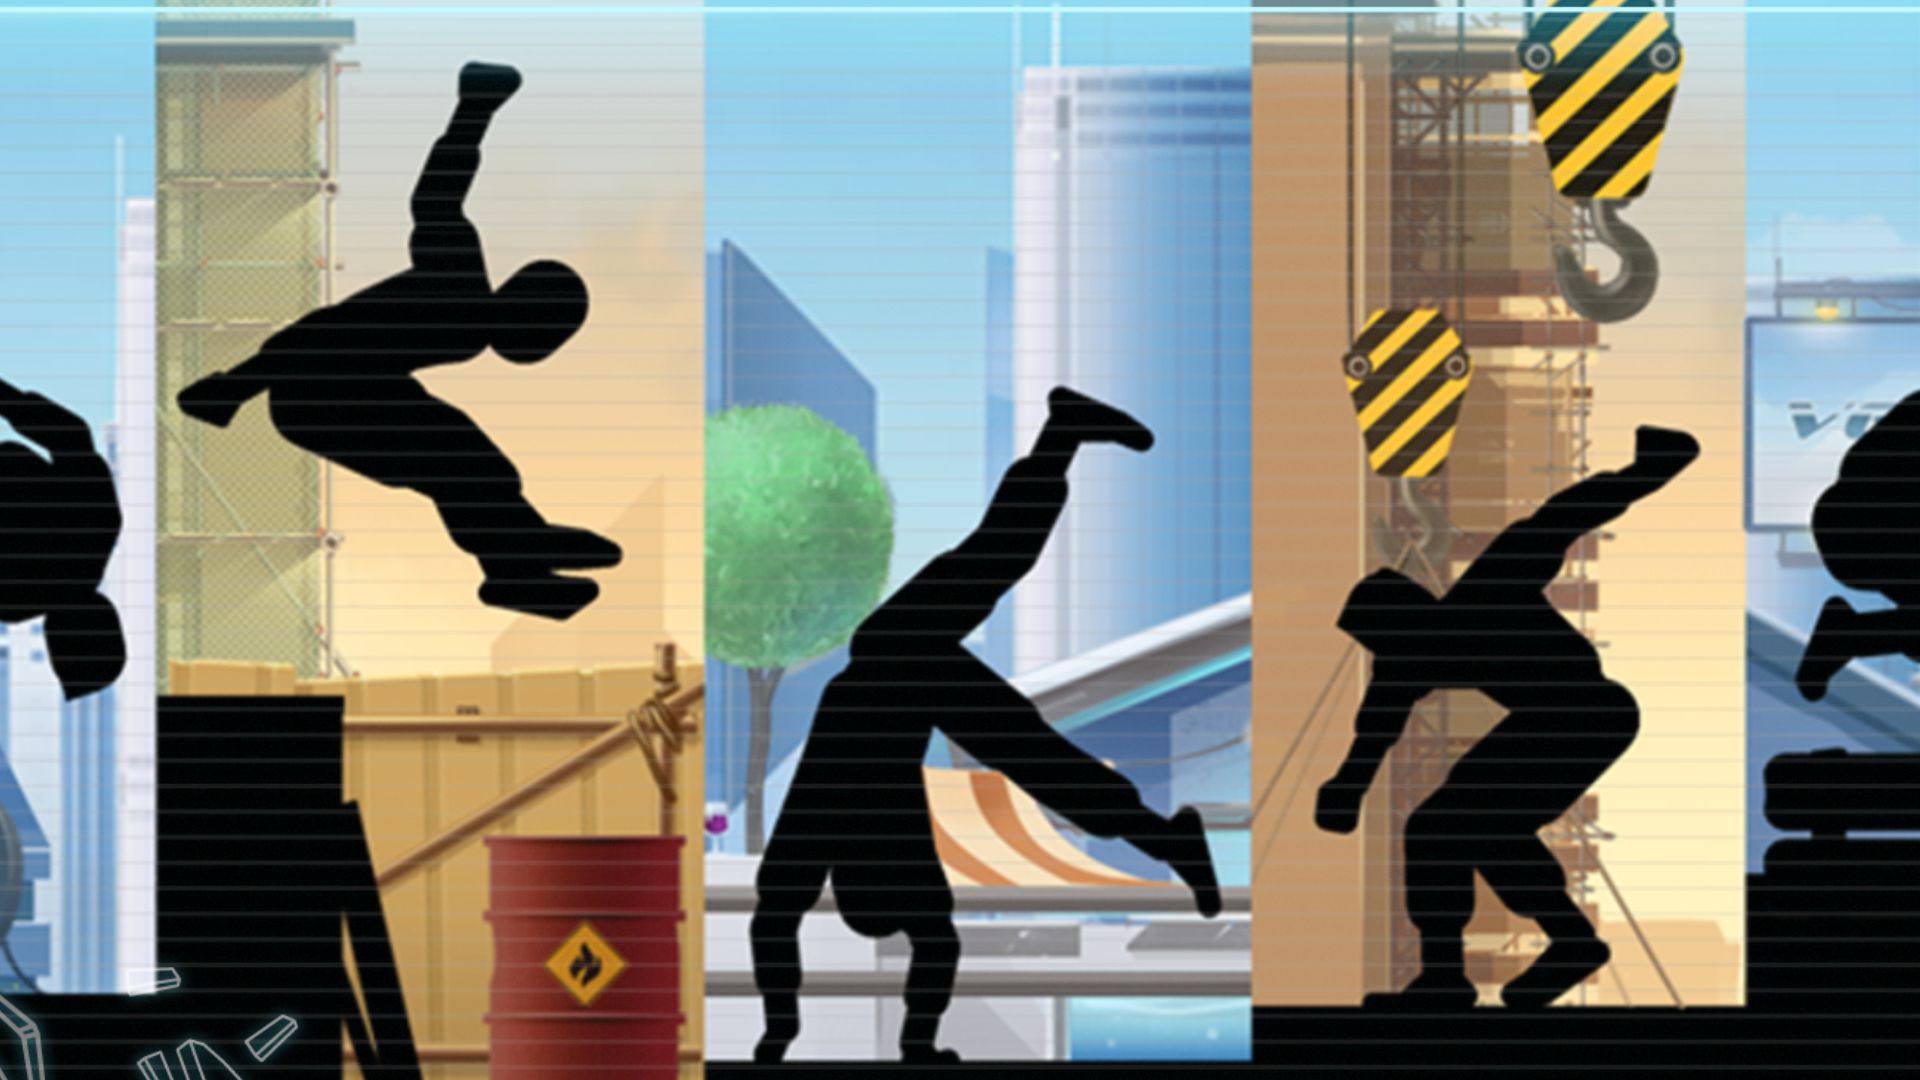 Juegos de parkour: tres siluetas en diferentes escenas que realizan movimientos acrobáticos de parkour.